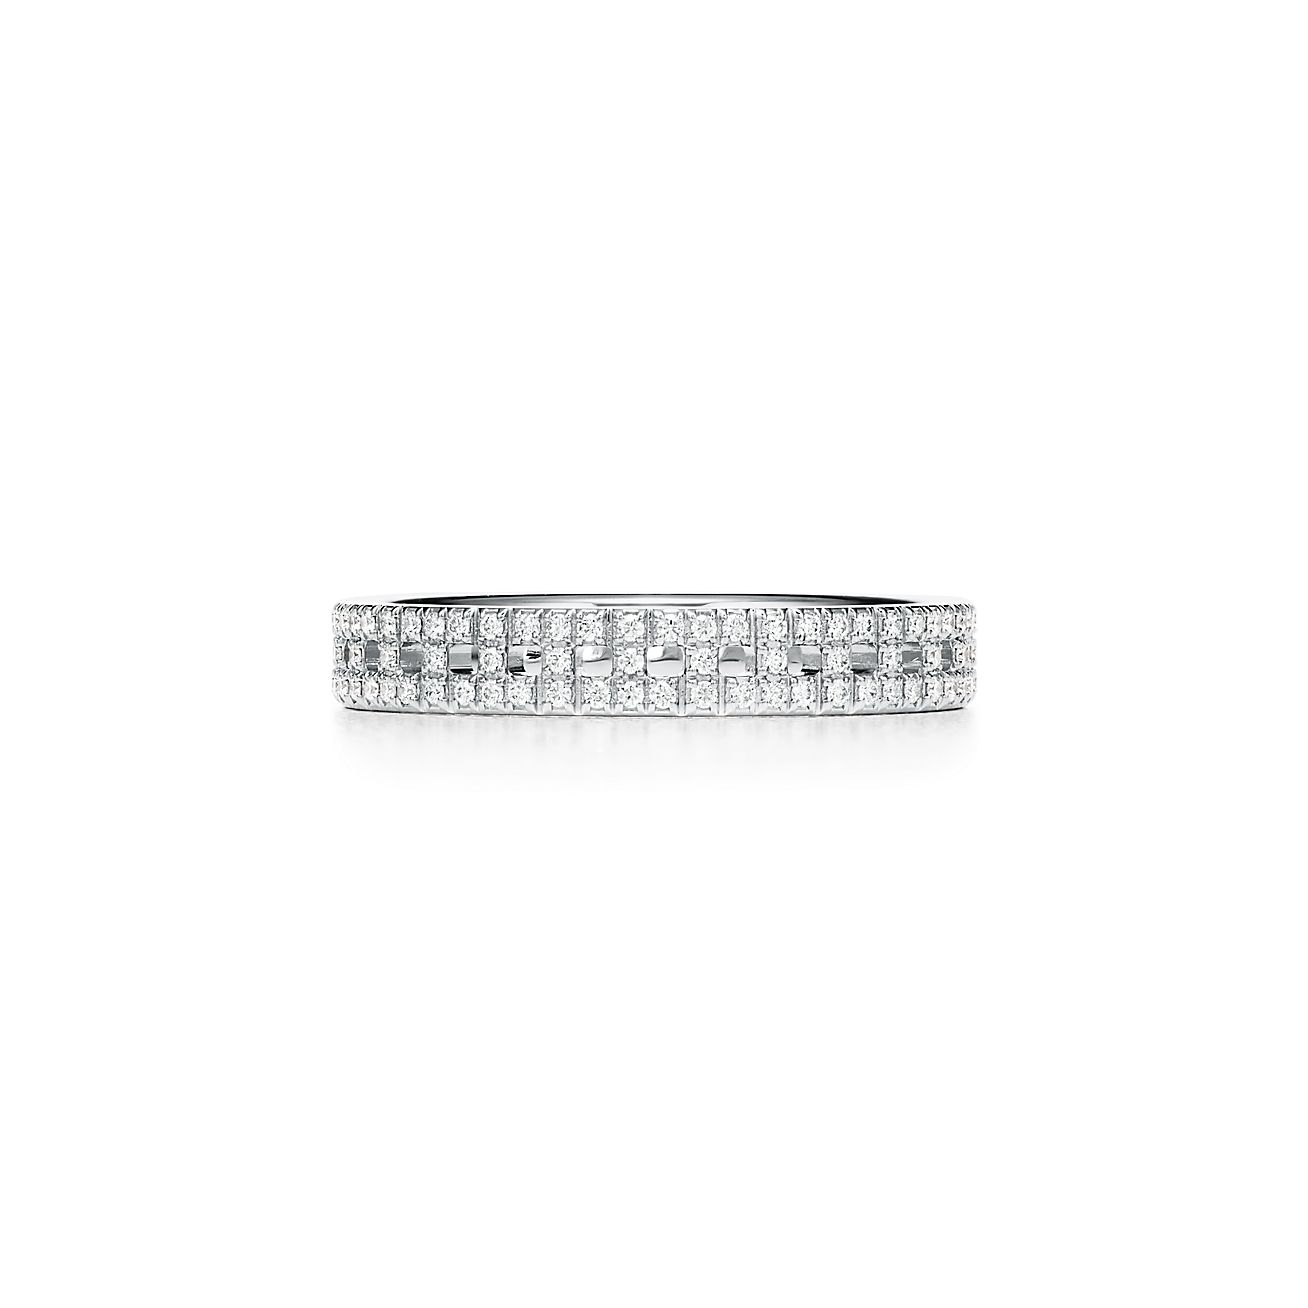 Tiffany T True narrow ring in 18k white gold with pavé diamonds 